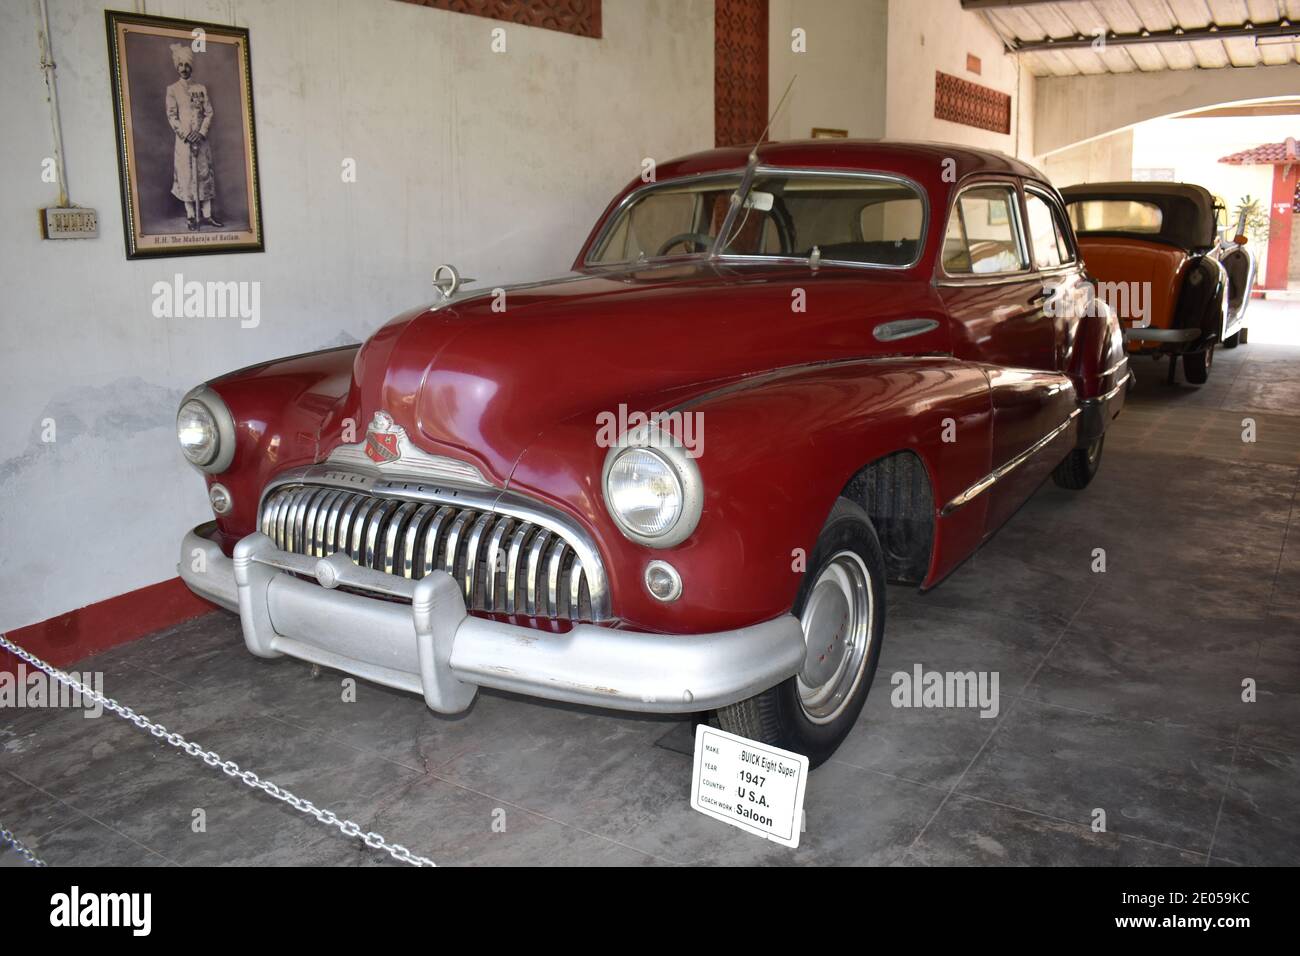 16 Nov 2020, Auto World Vintage Car Museum. Ahmedabad, Gujarat, India. BUICK EIGHT SUPER, YEAR 1947, U.S.A, SALOON Stock Photo